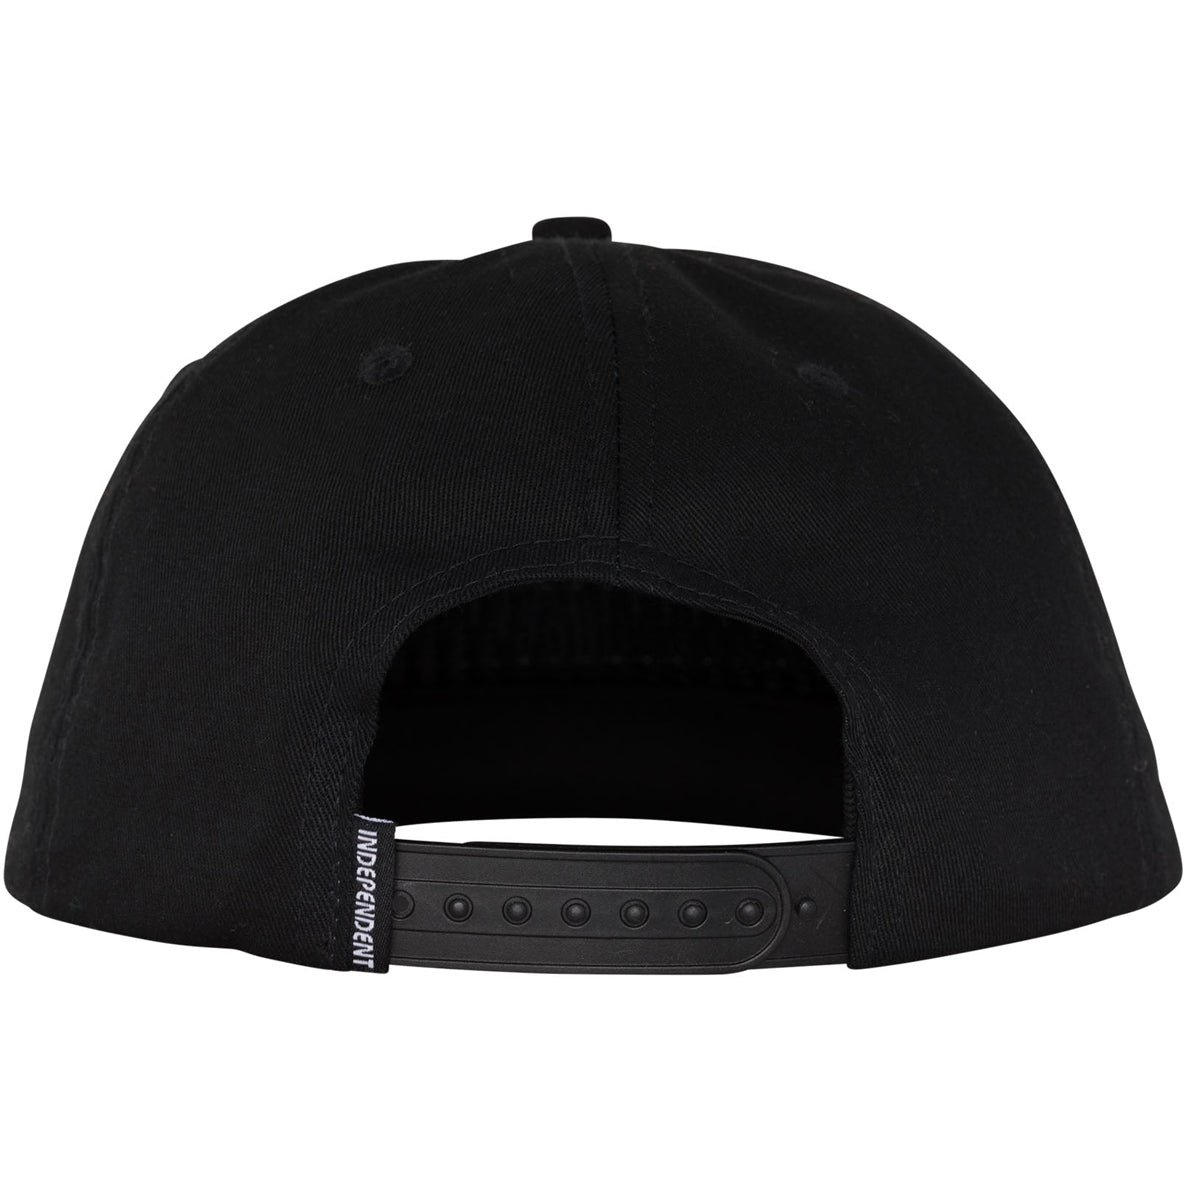 Independent B/C Groundwork Snapback Hat - Charcoal/Black image 2